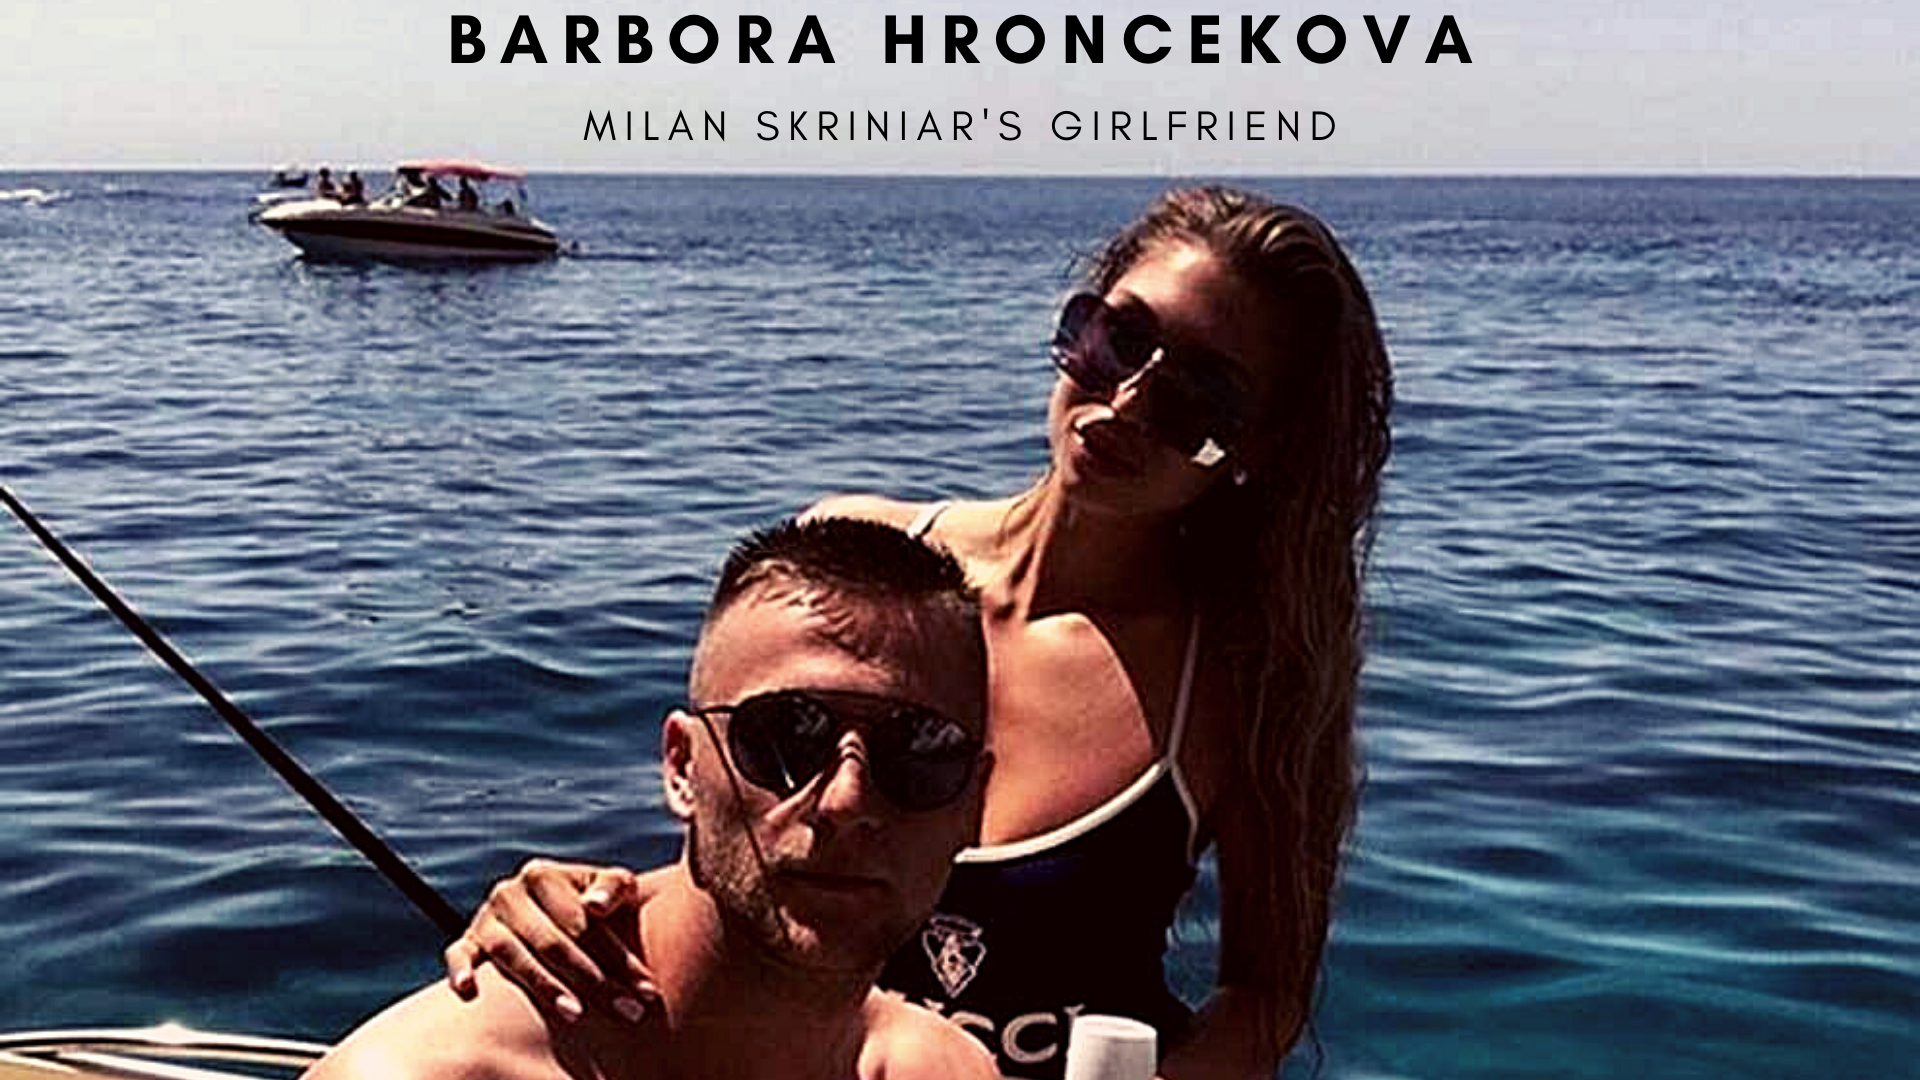 Milan Skriniar with girlfriend Barbora Hroncekova. (Credit: Instagram)